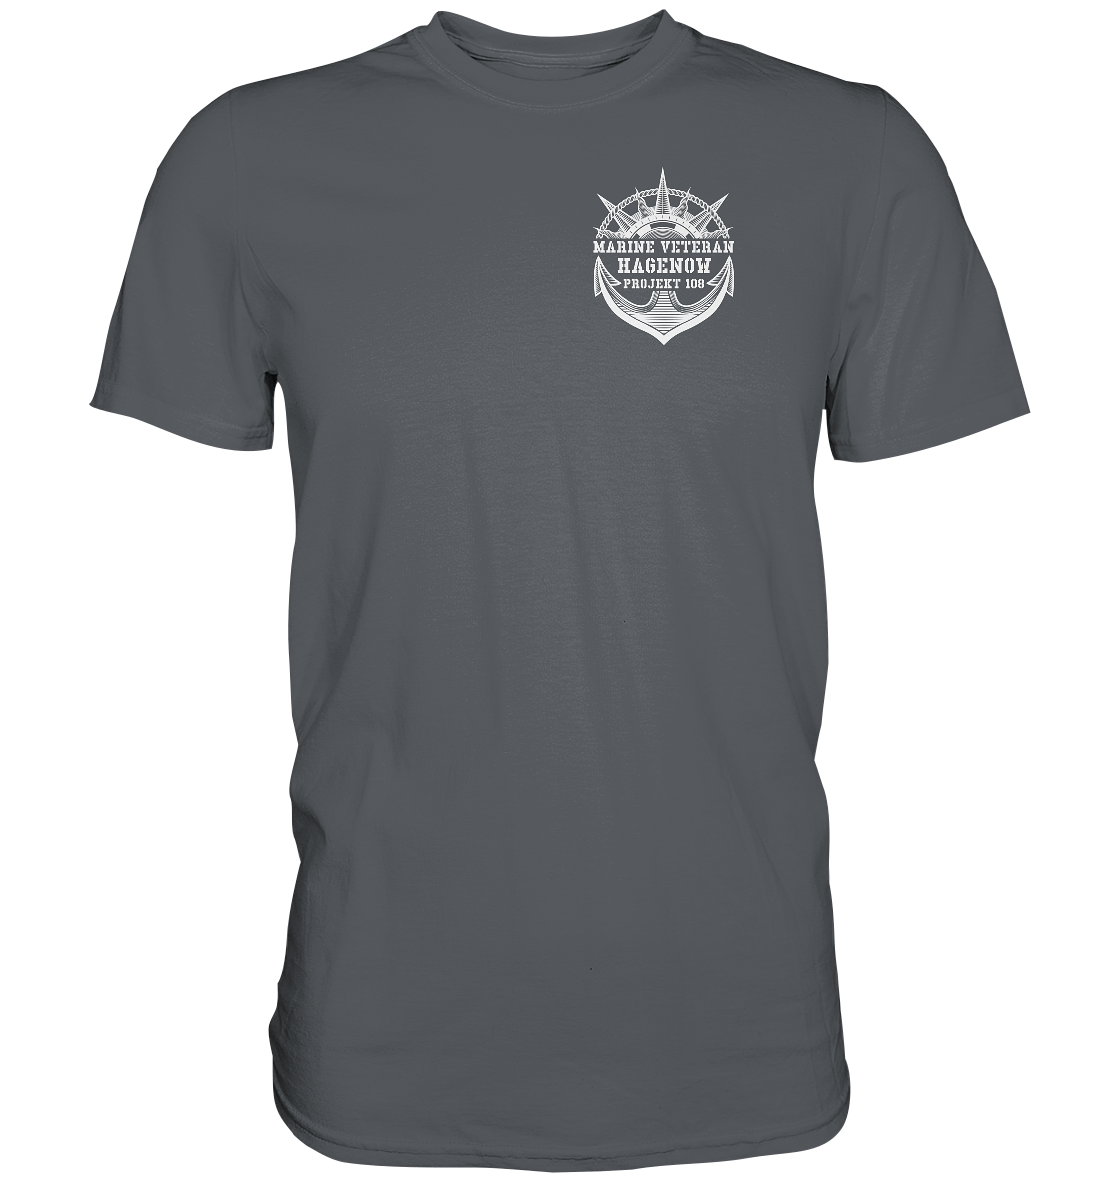 Projekt 108 HAGENOW Marine Veteran Brustlogo - Premium Shirt